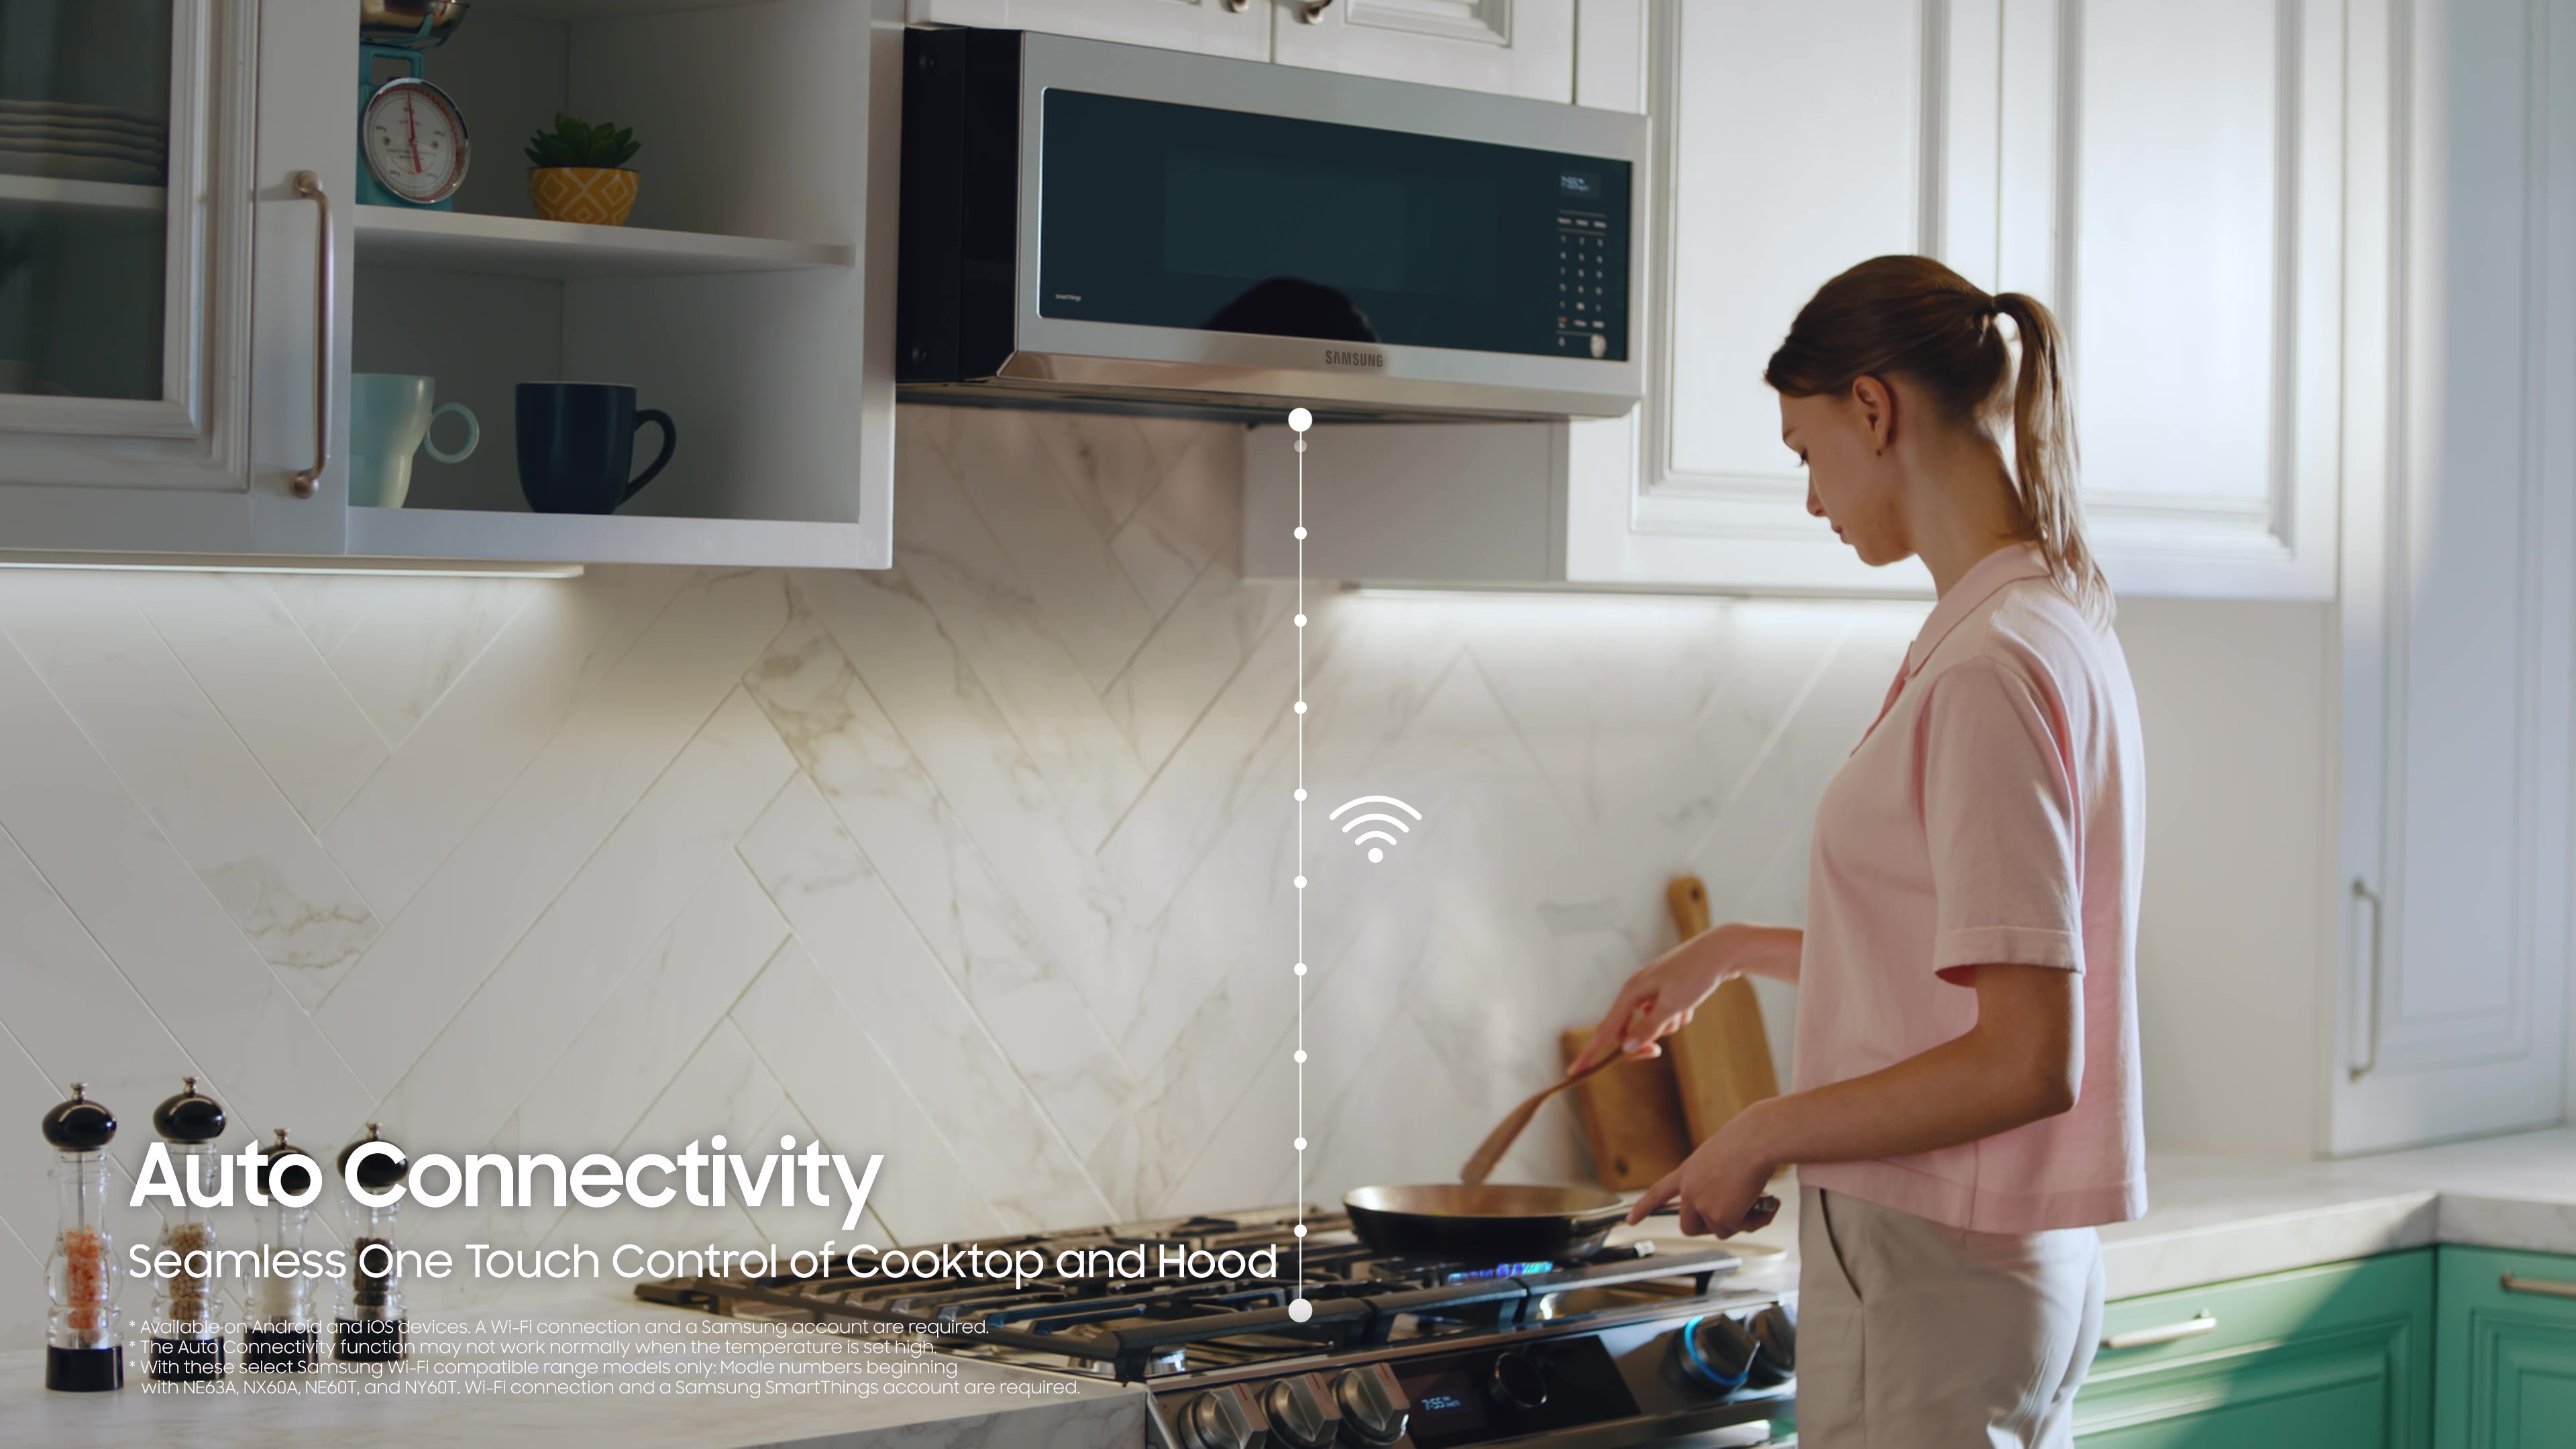 https://image-us.samsung.com/SamsungUS/home/home-appliances/microwaves/over-the-range/1142022/Auto-Connectivity-thumbnail.jpg?$feature-benefit-jpg$